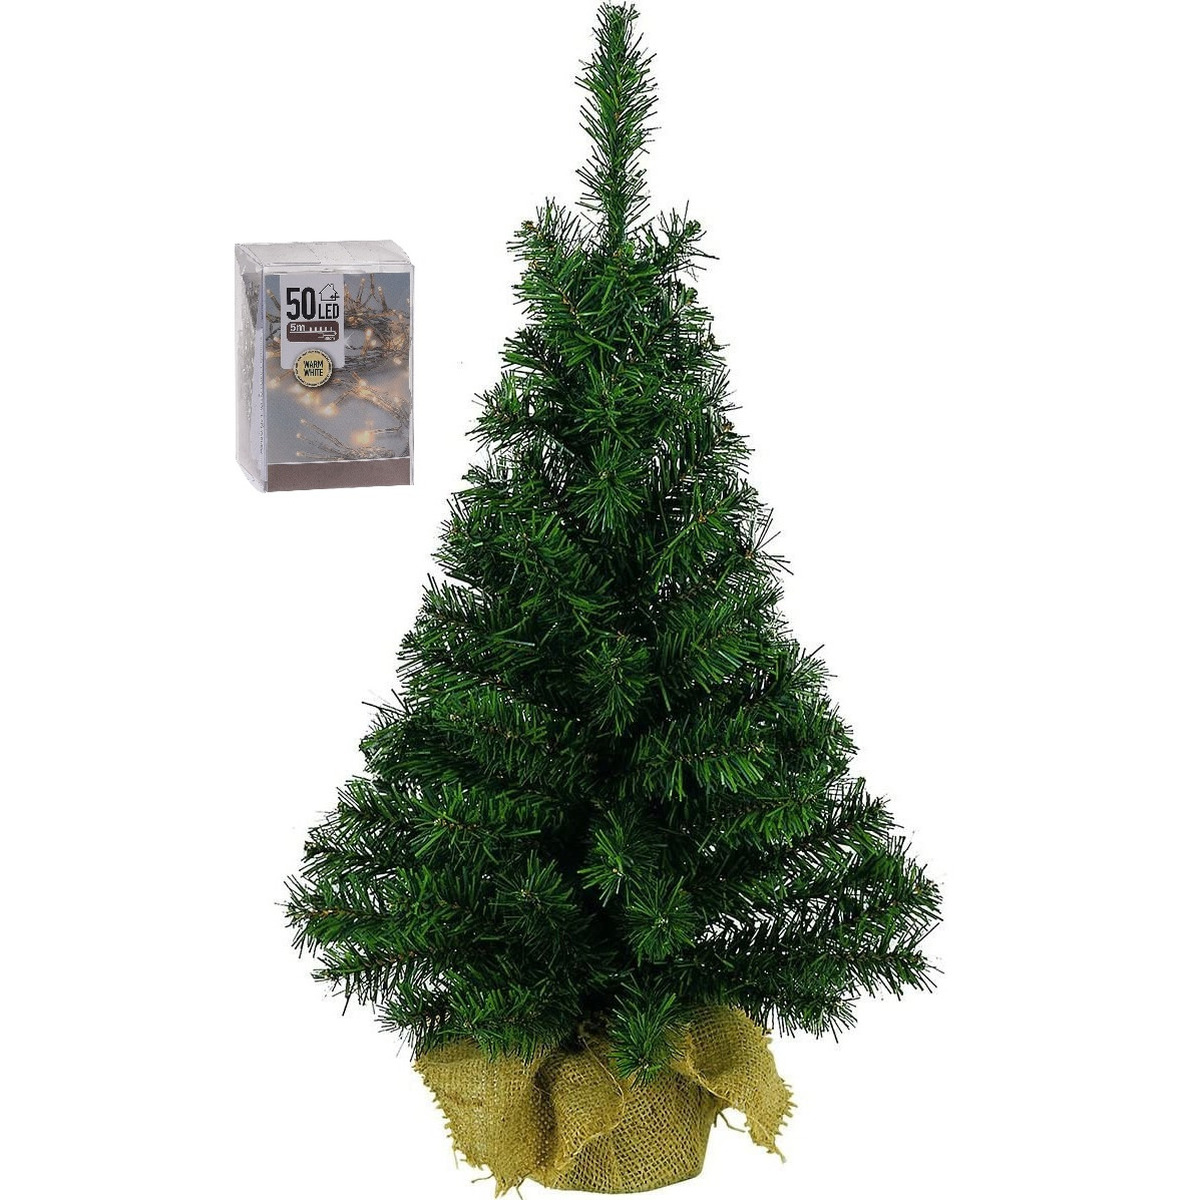 Volle kunst kerstboom 75 cm in jute zak inclusief 50 warm witte lampjes